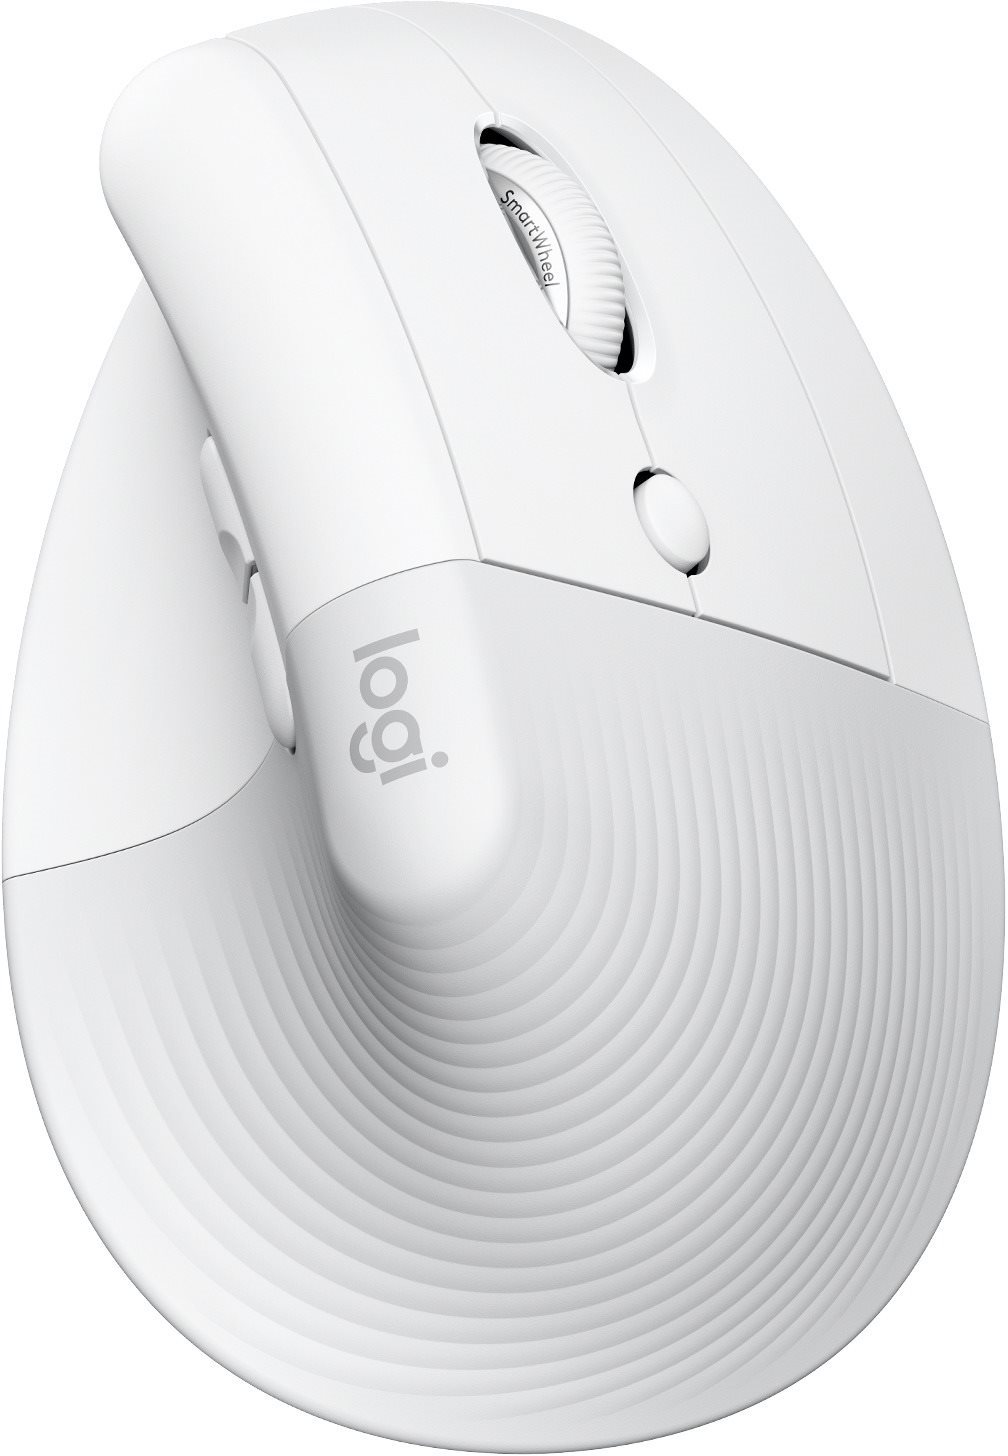 Logitech Lift Vertical Ergonomic Mouse for Mac Off-white